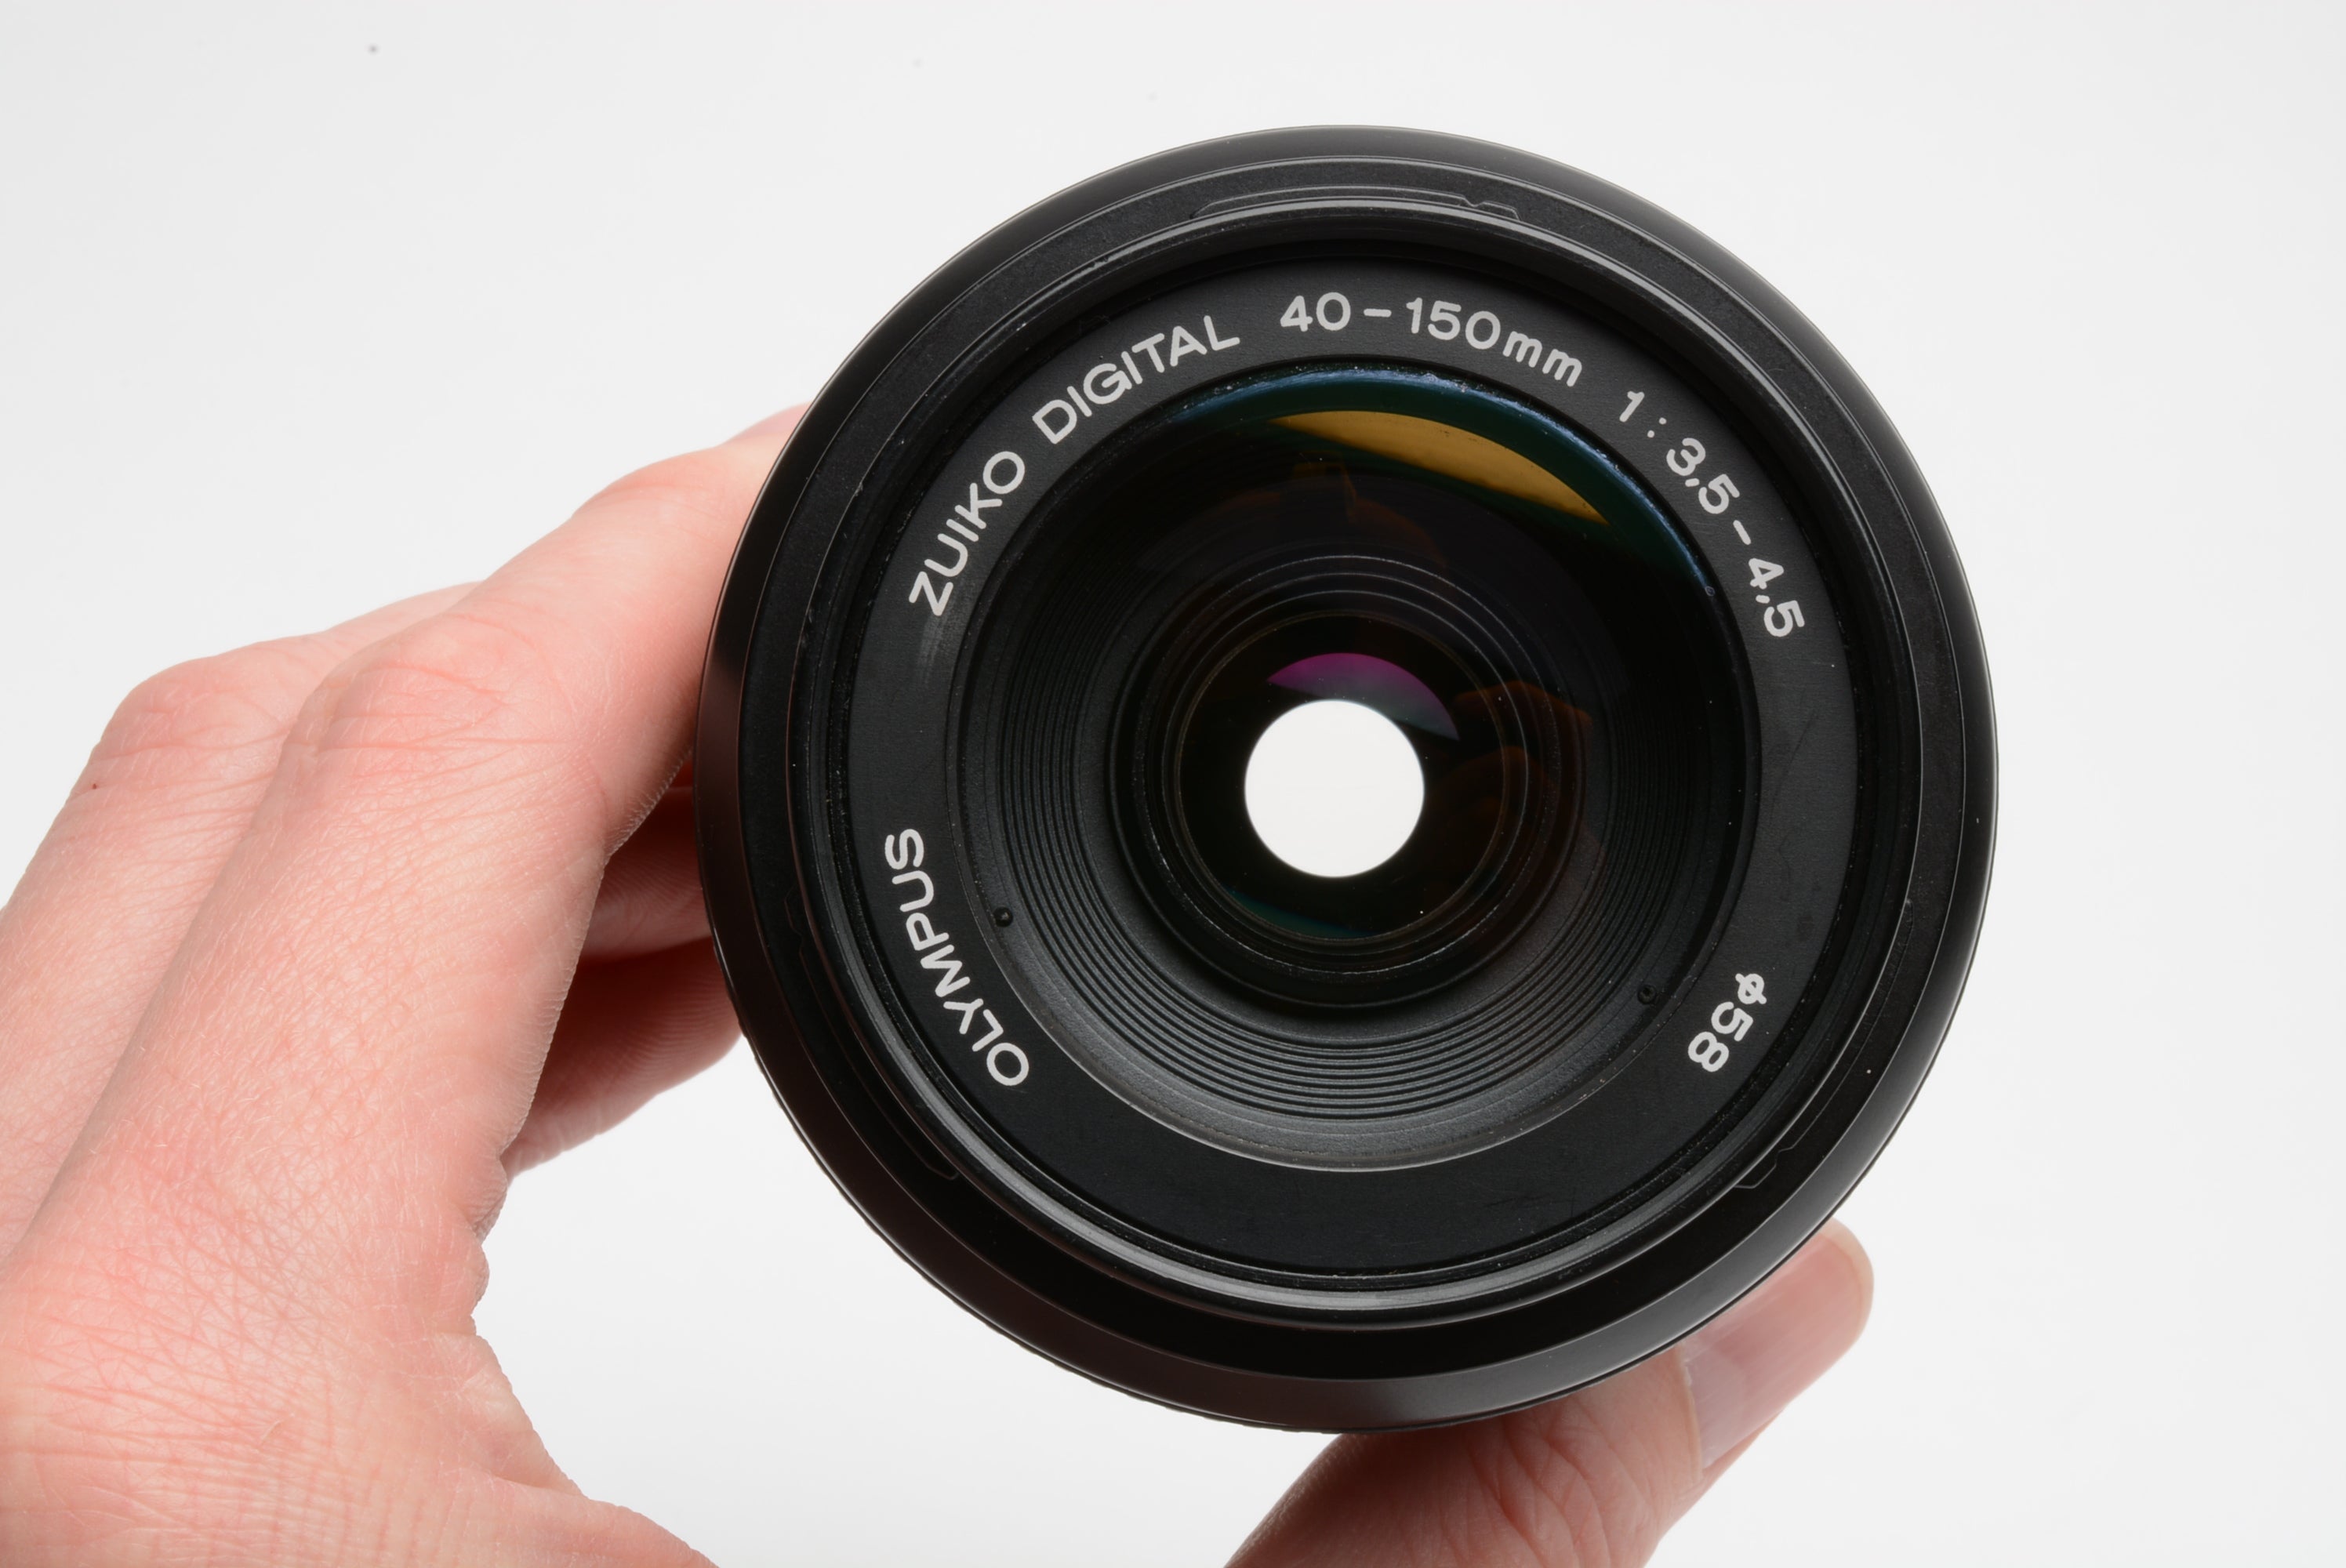 Olympus 40-150mm f3.5-4.5 Digital lens 4/3 mount, caps, tested